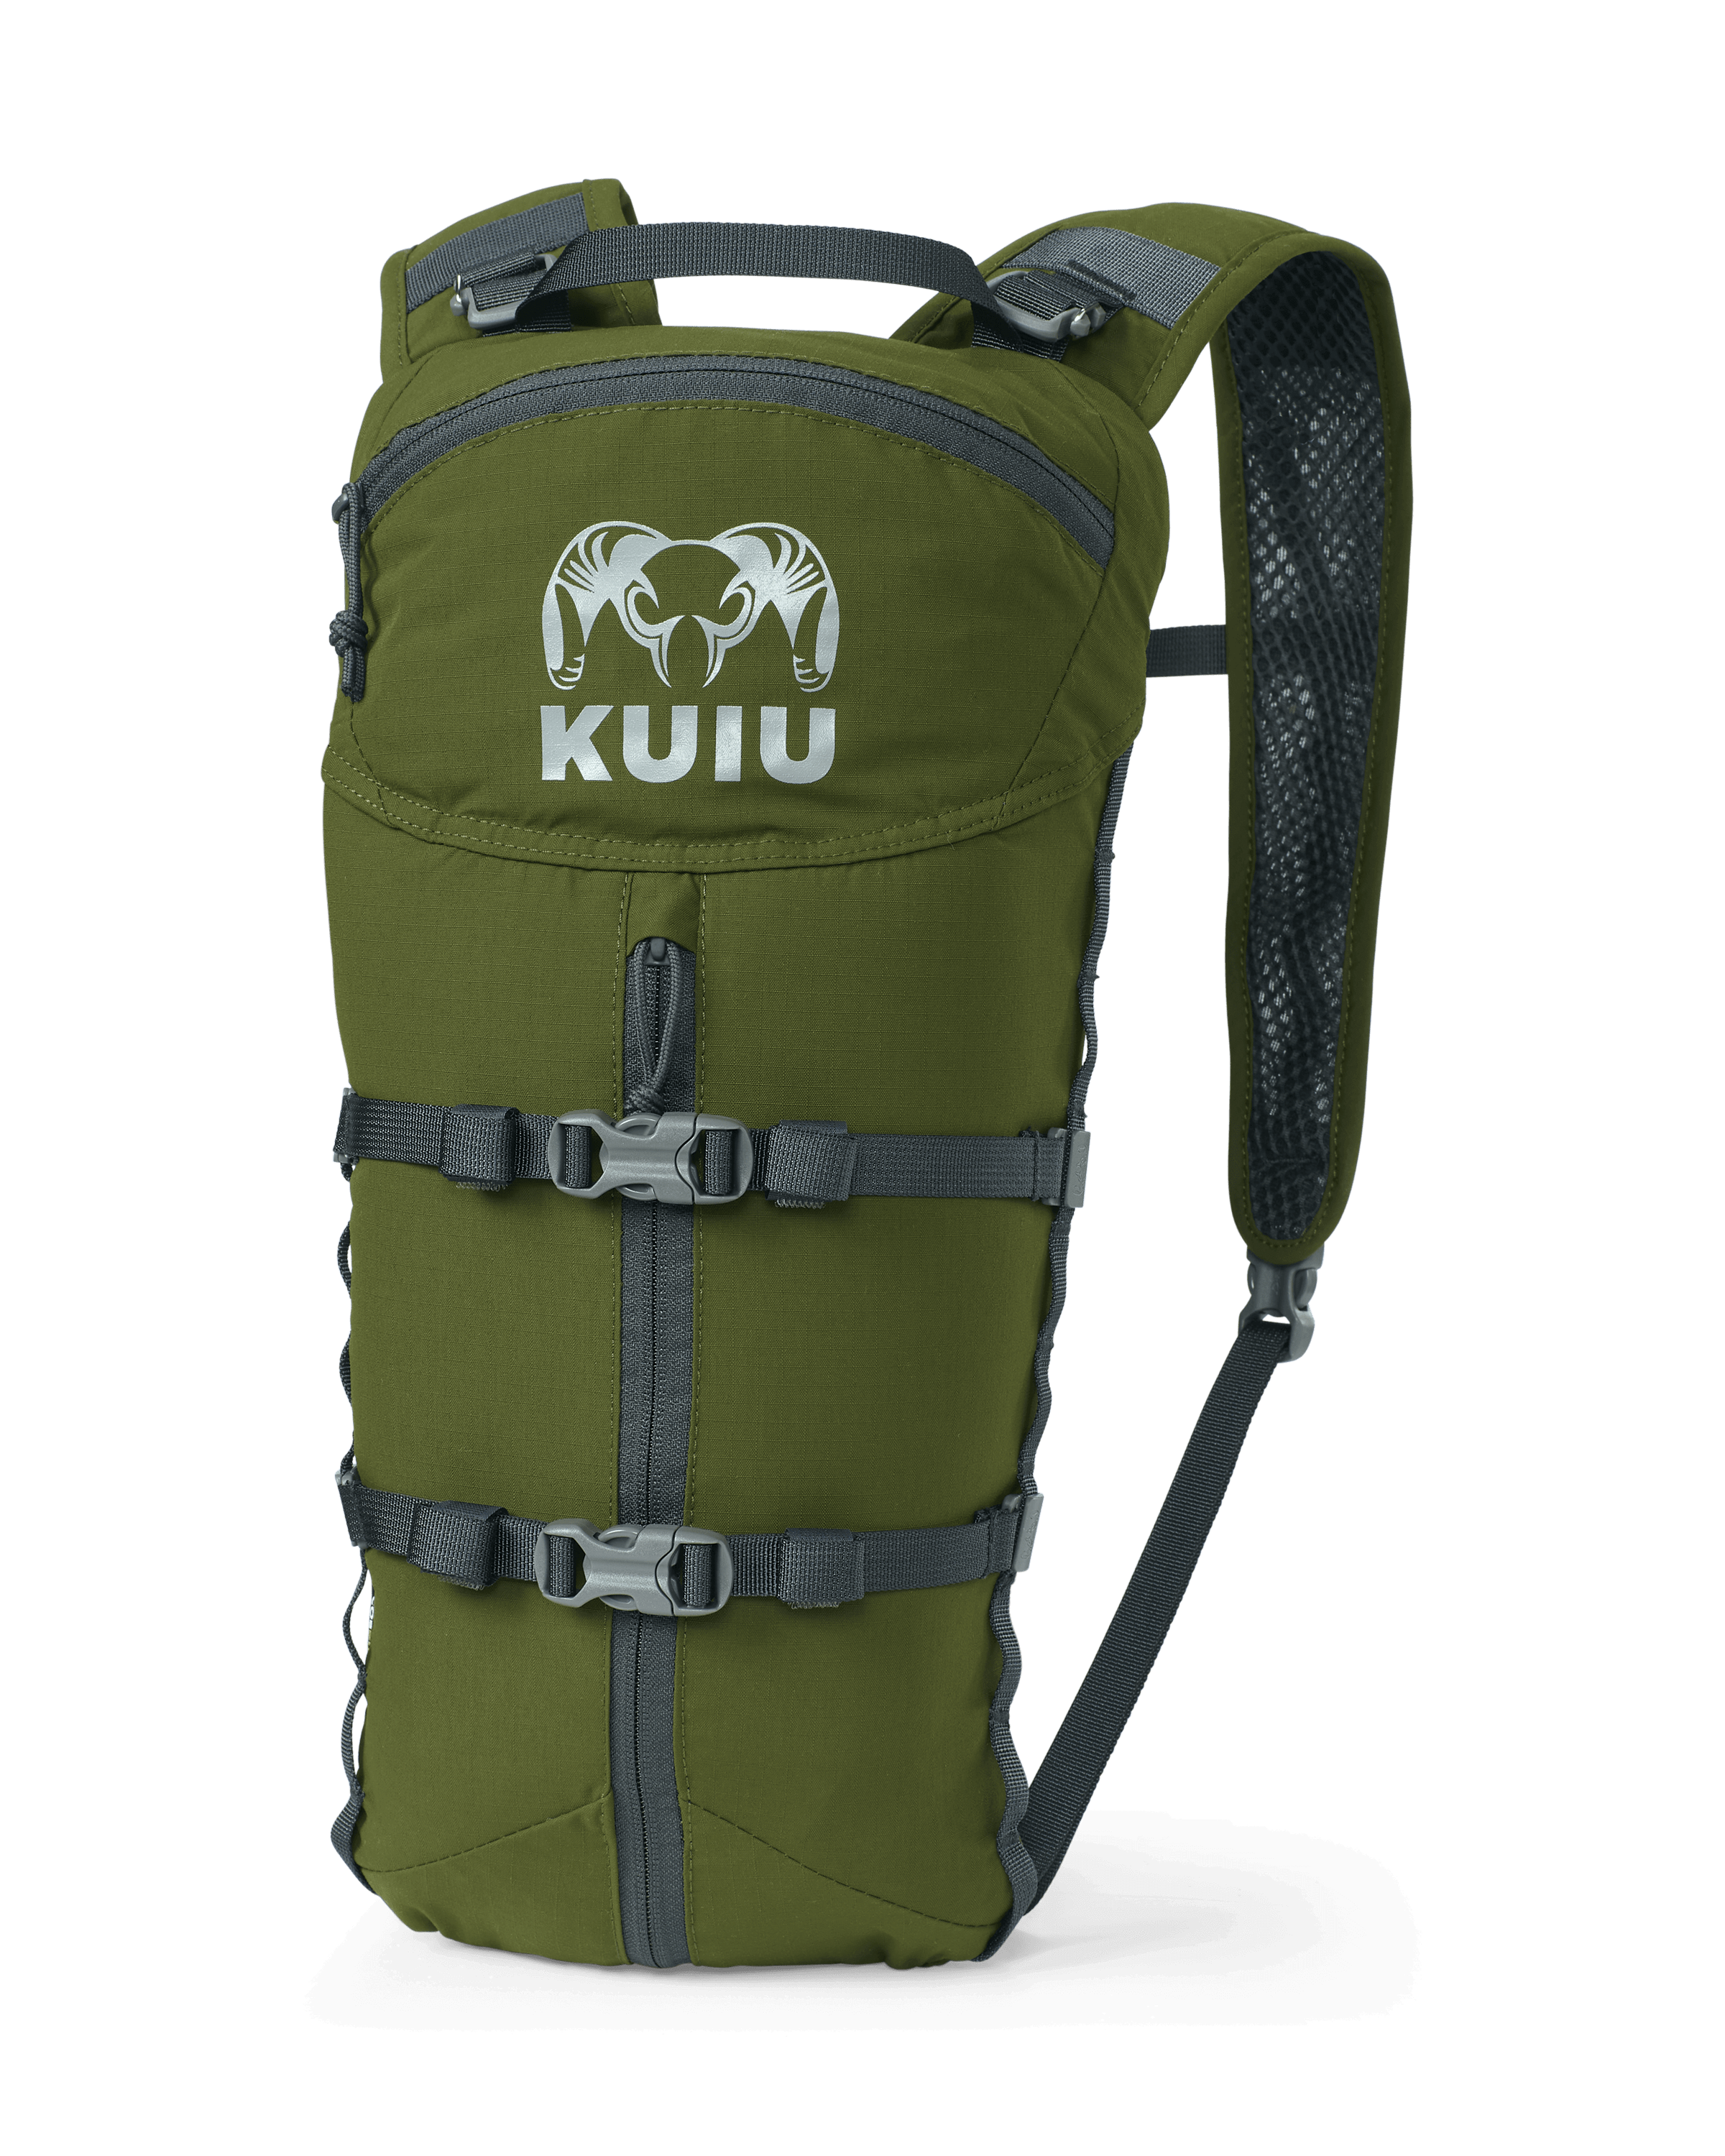 KUIU Stalker 500 Day Bag Pack PRO in Verde Green Hunting Pack